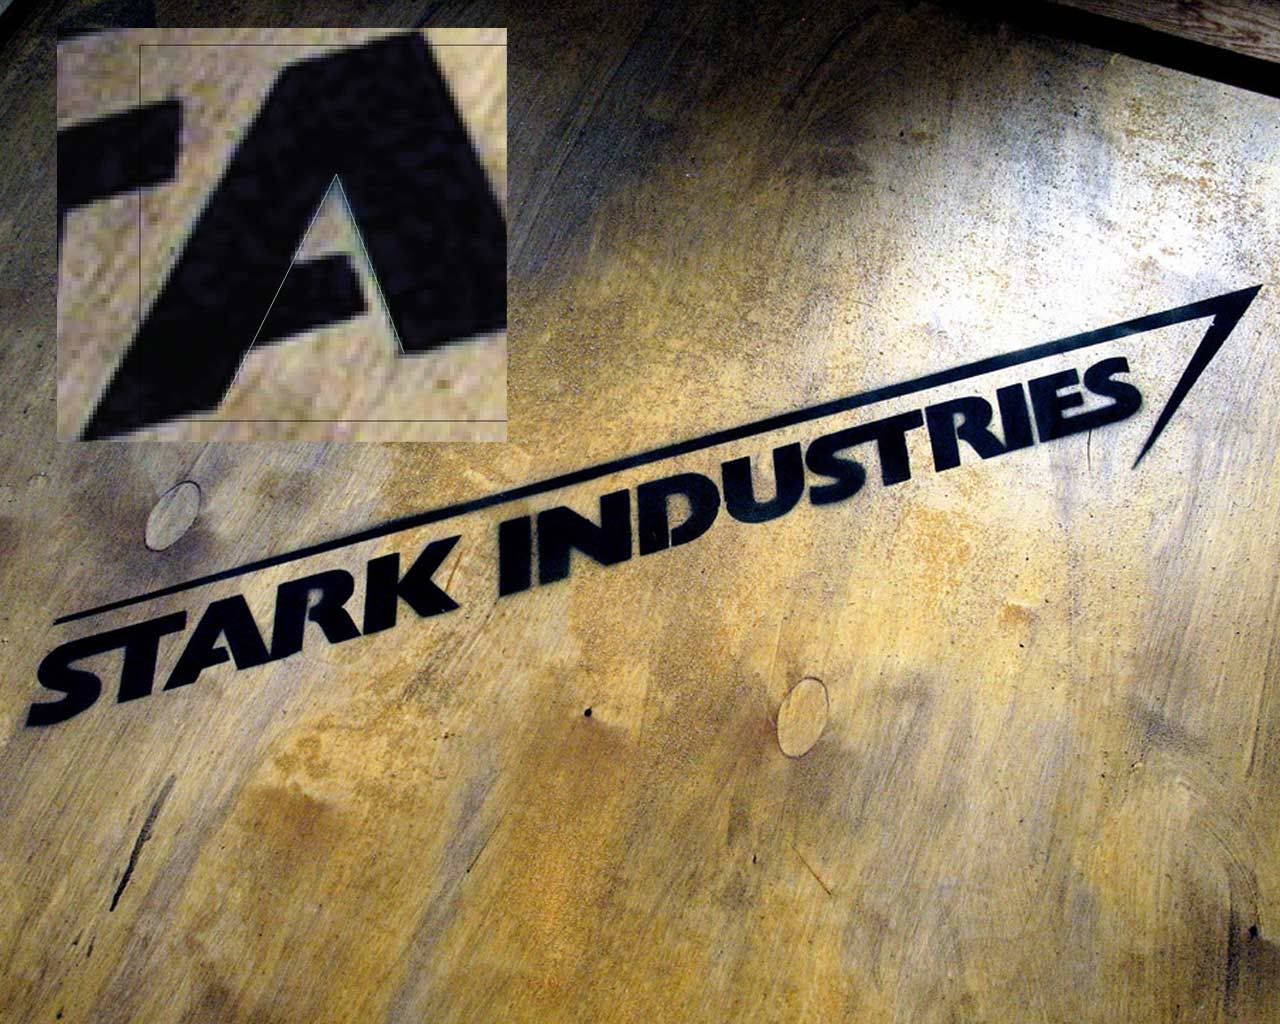 Stark industries logo font